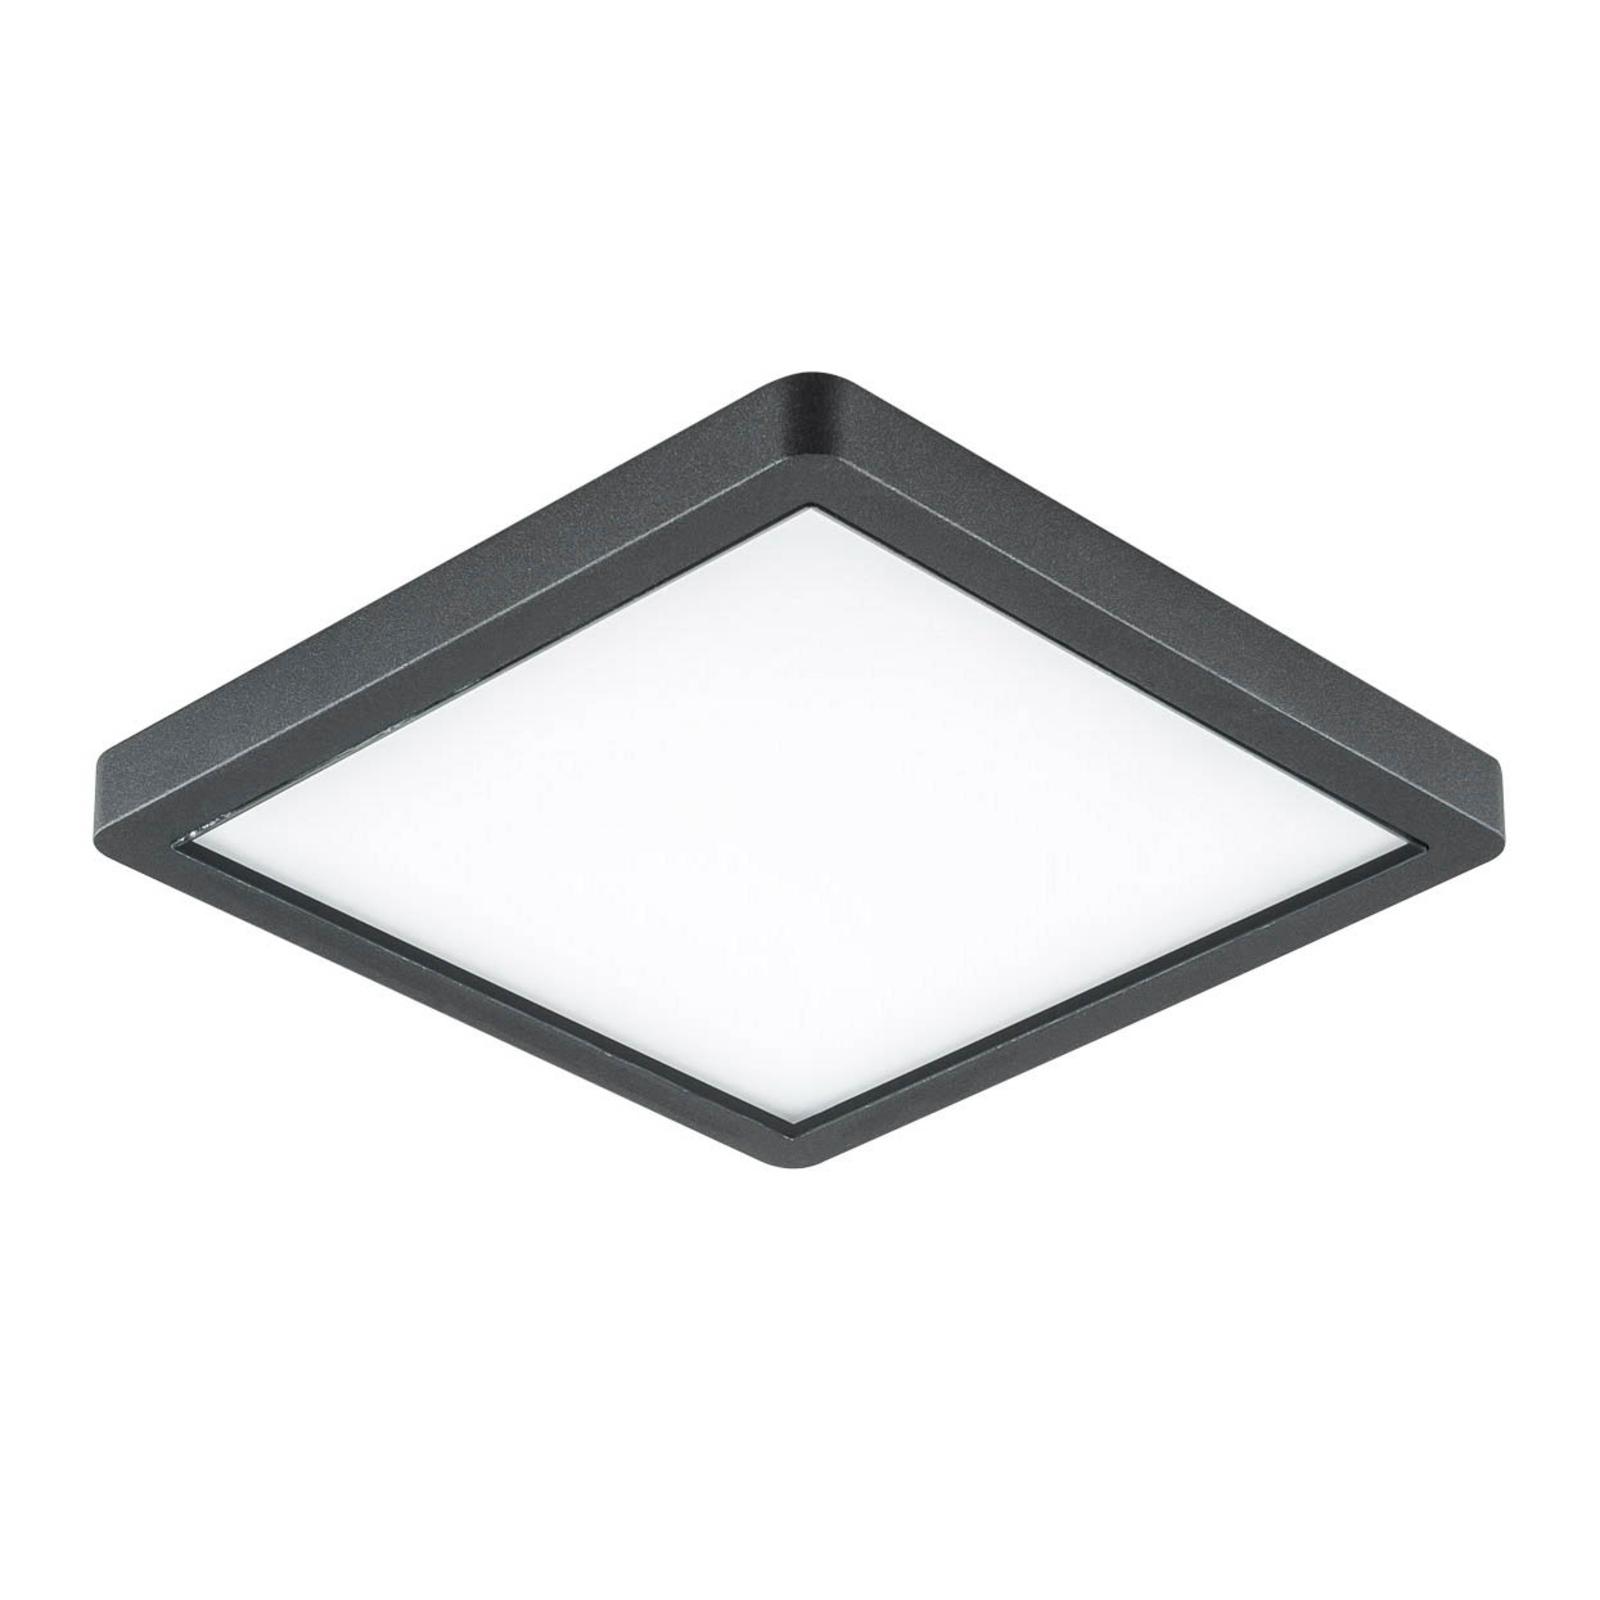 EVN Tectum LED outdoor ceiling light angular glass